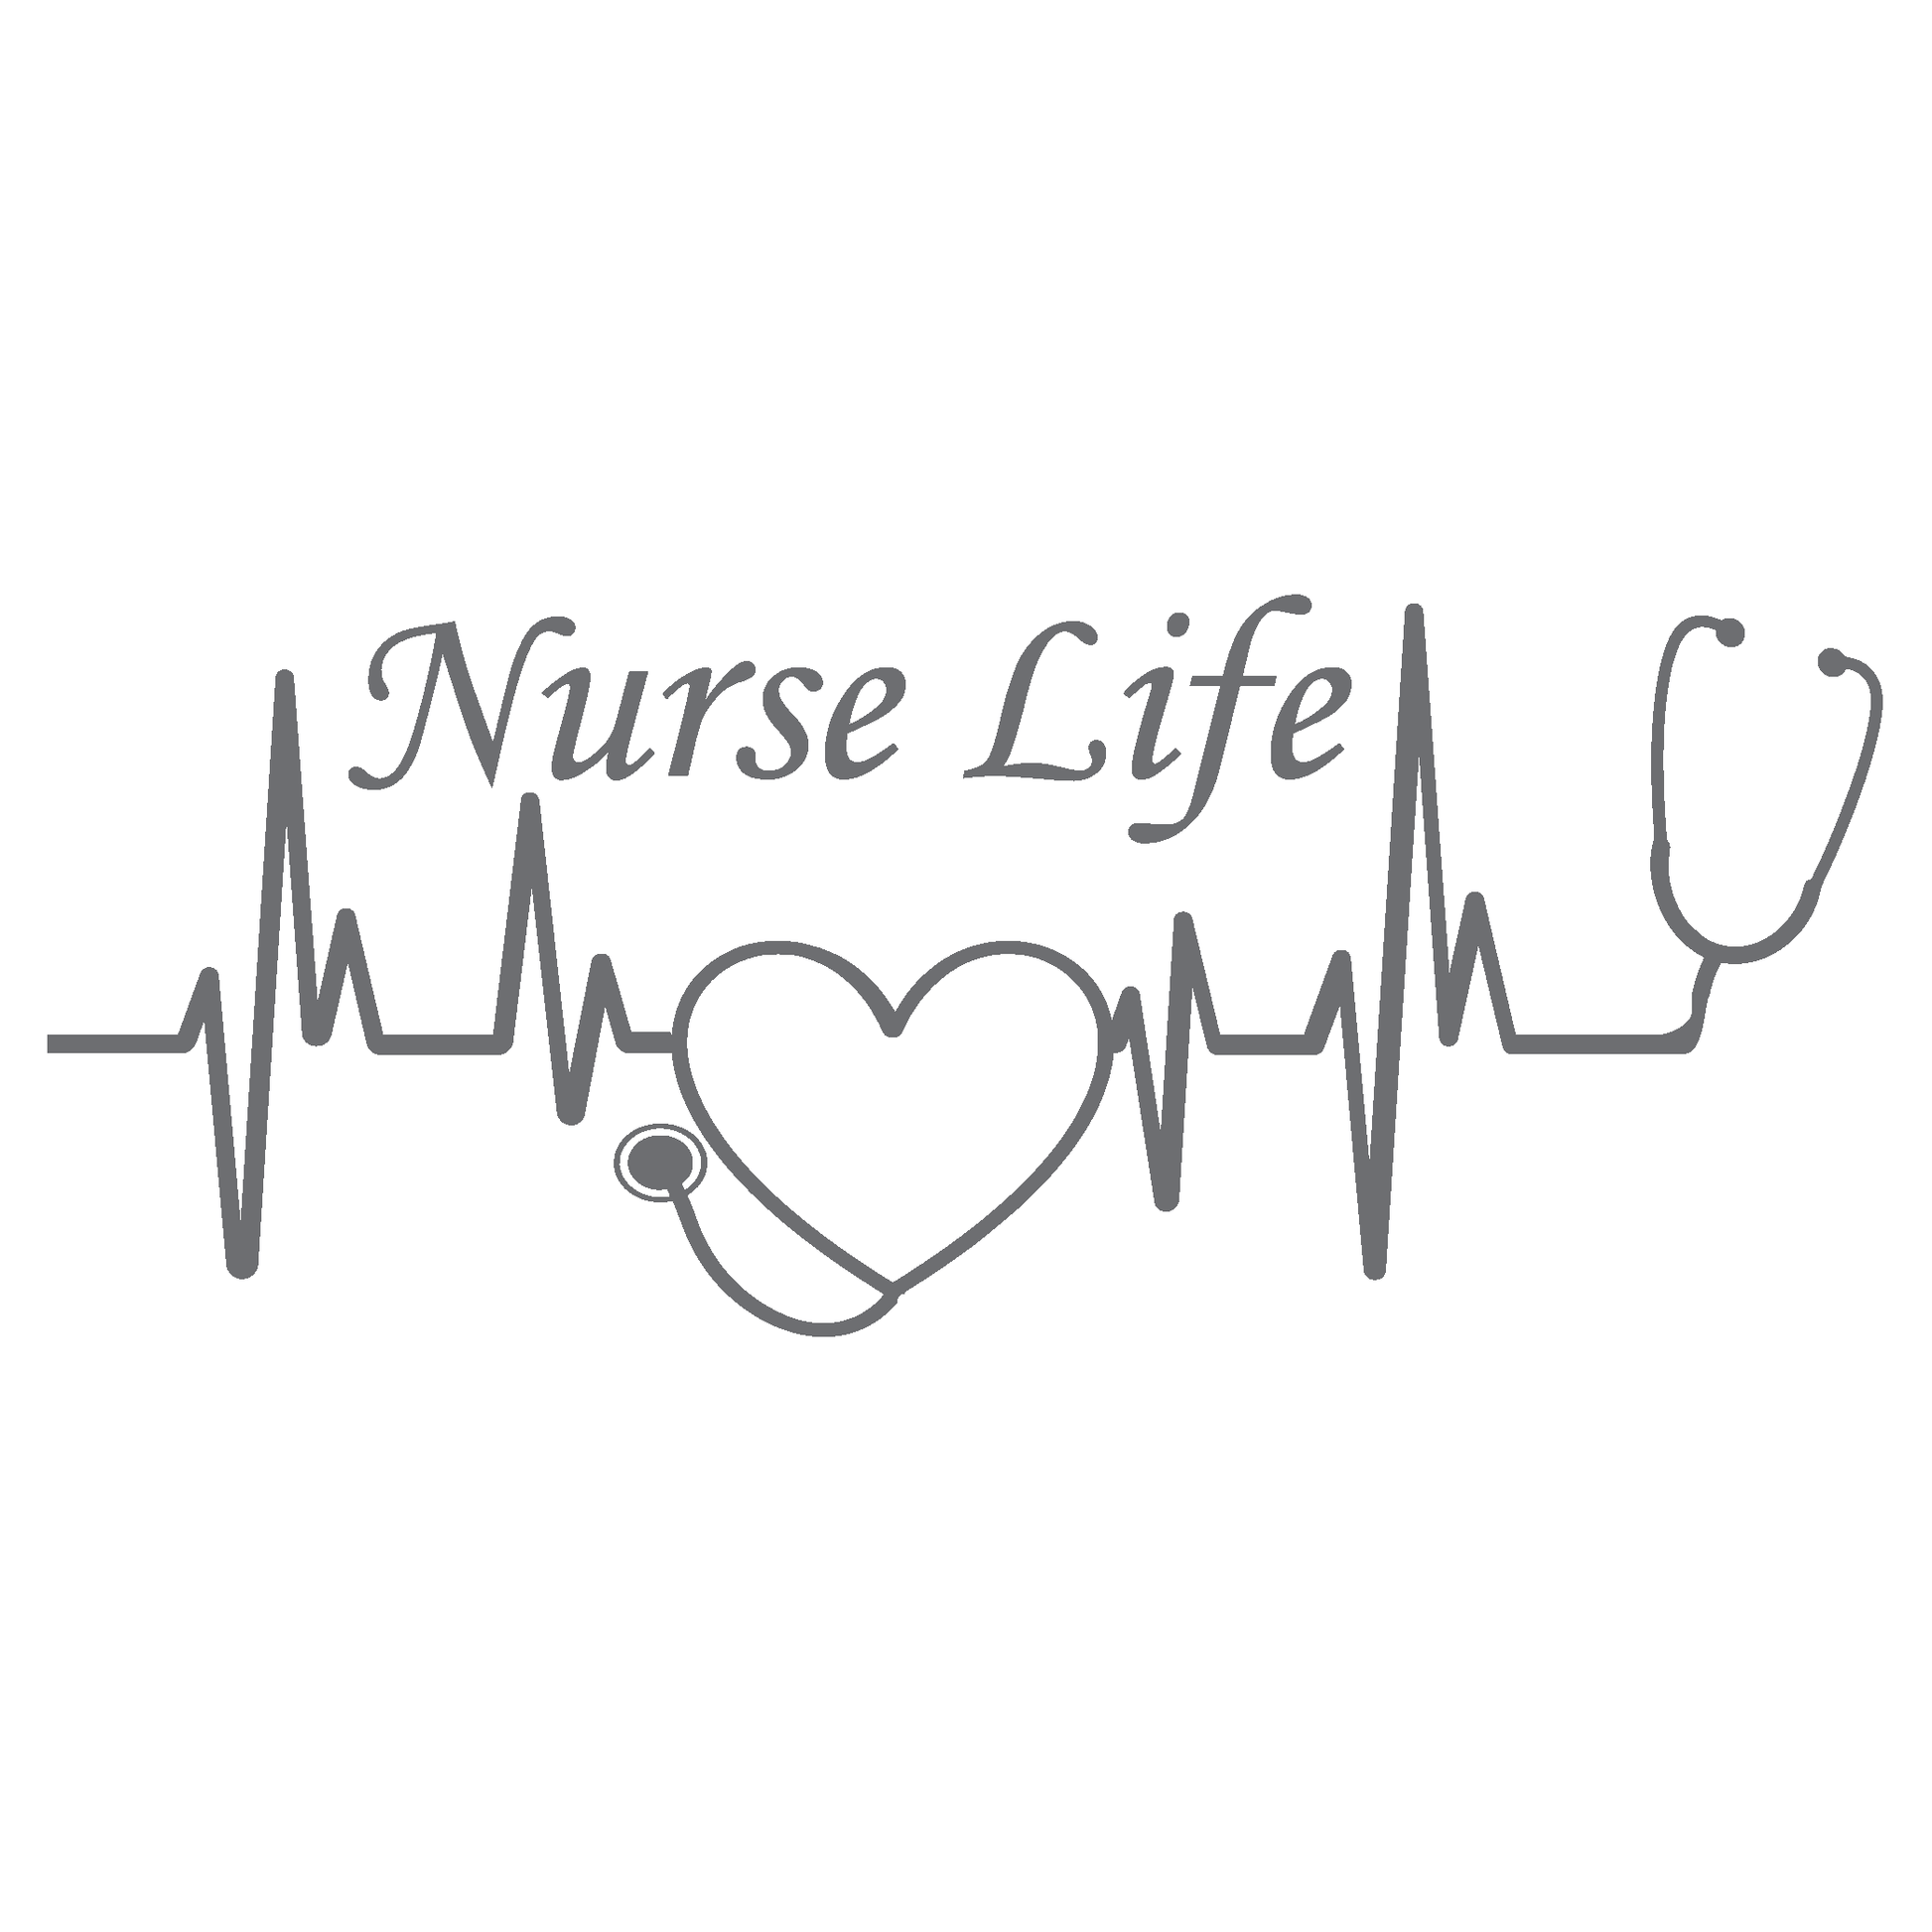 ShopVinylDesignStore.com Heartbeat Nurse Life Wide Shop Vinyl Design decals stickers